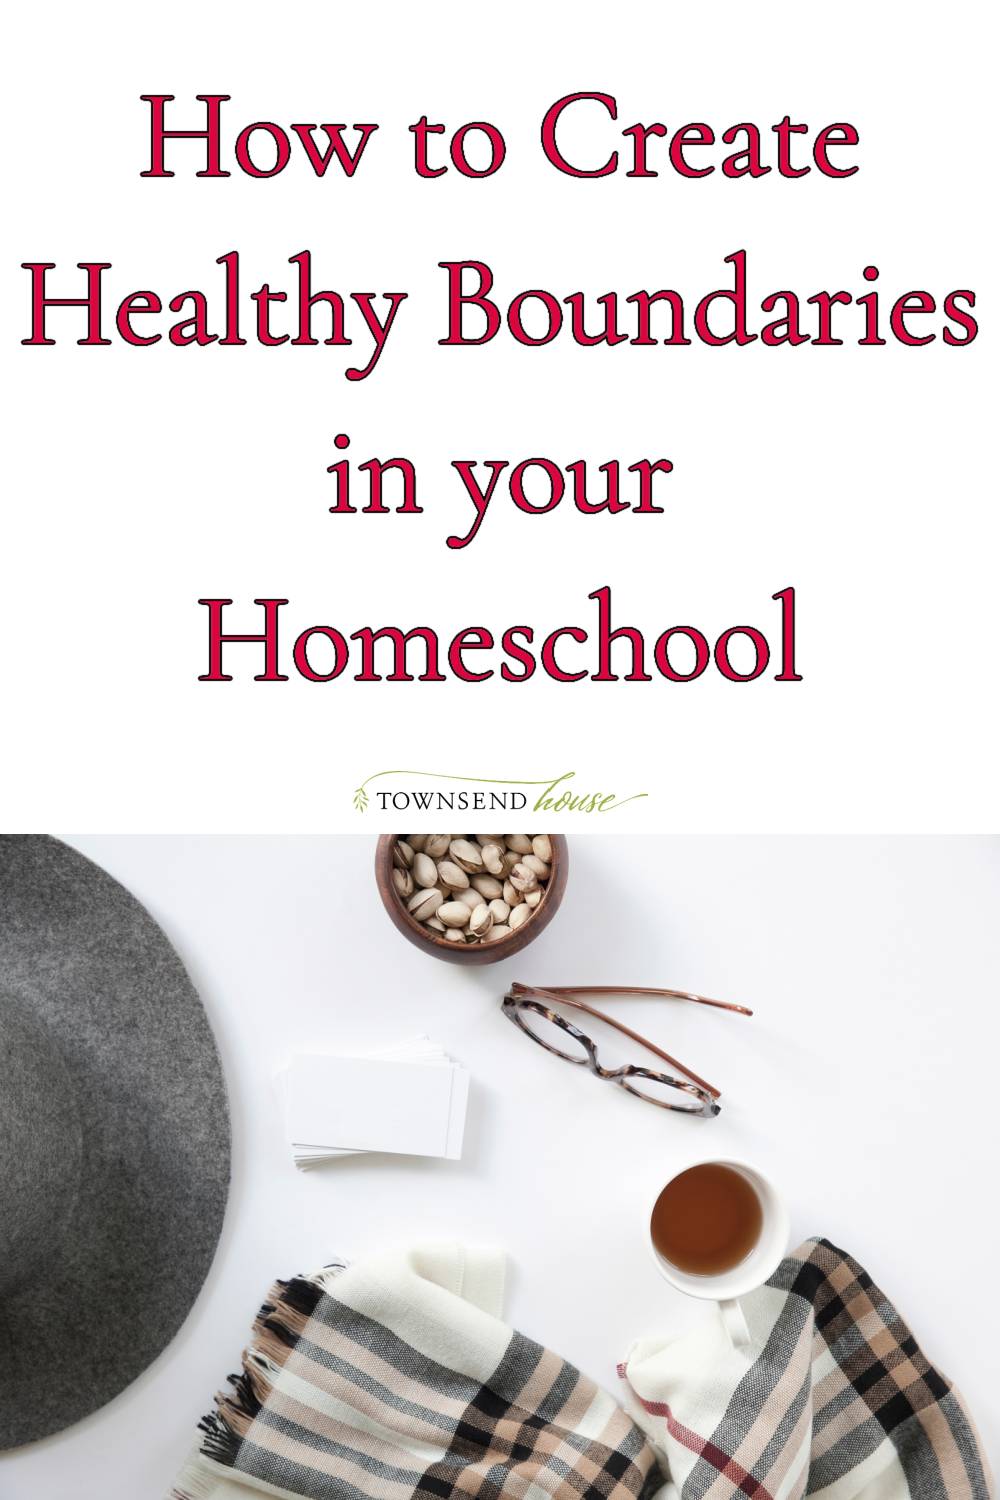 How to Create Healthy Boundaries in your Homeschool